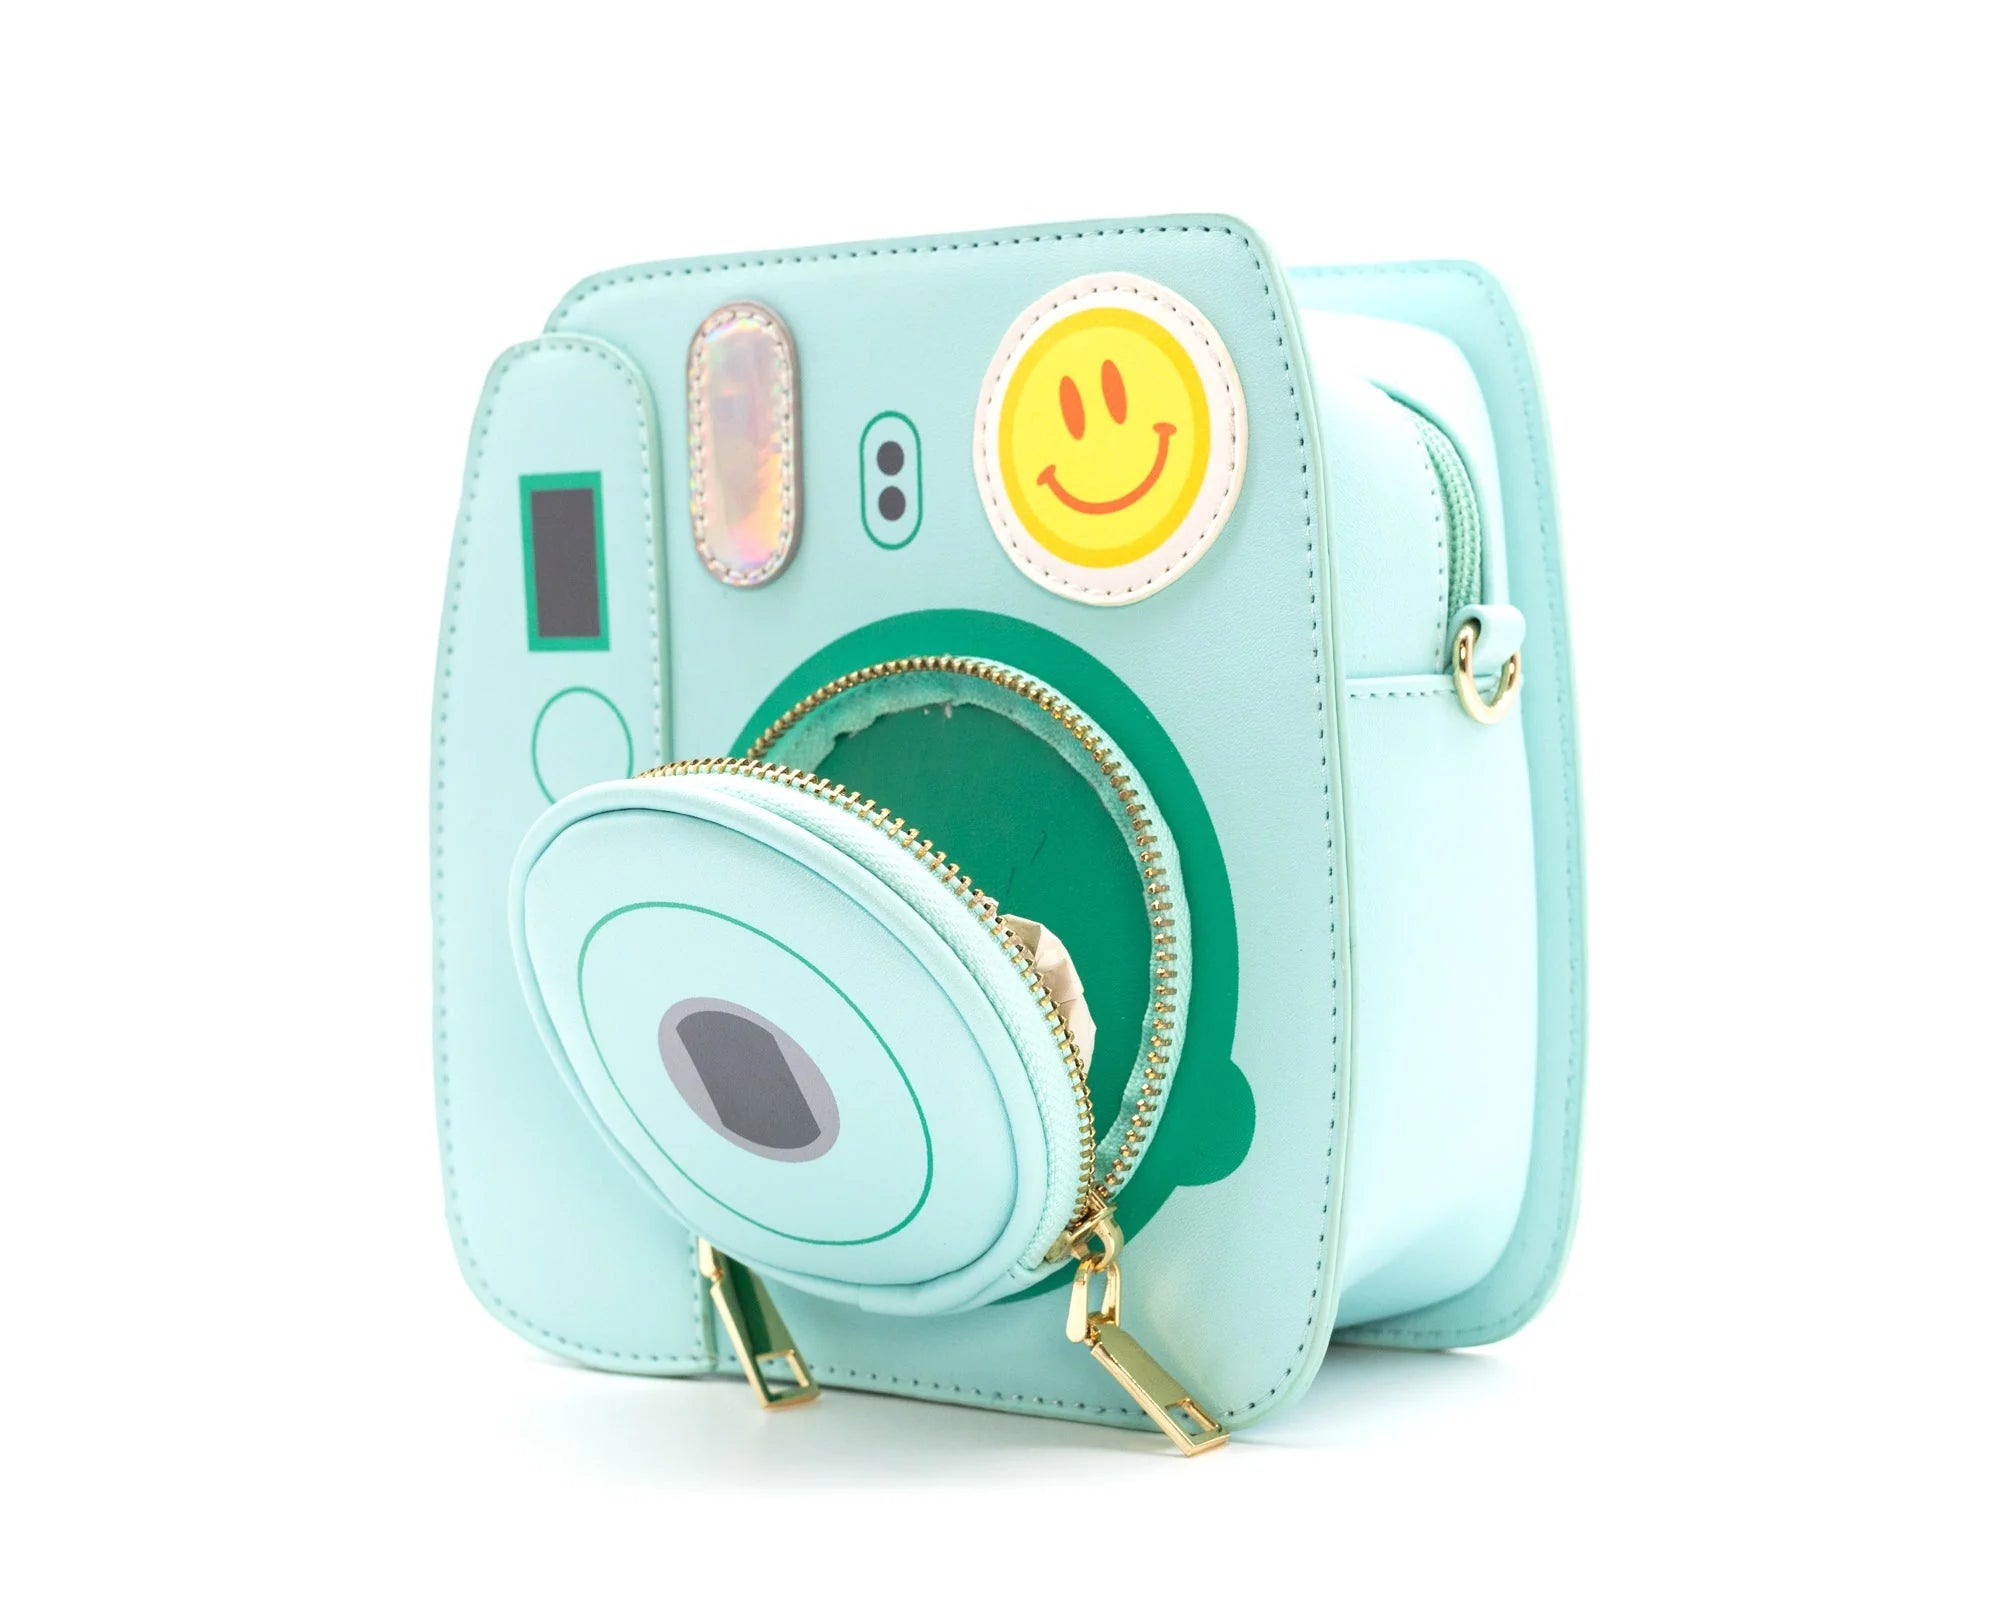 Oh Snap Instant Camera in Minty Blue Handbag by Bewaltz #7755